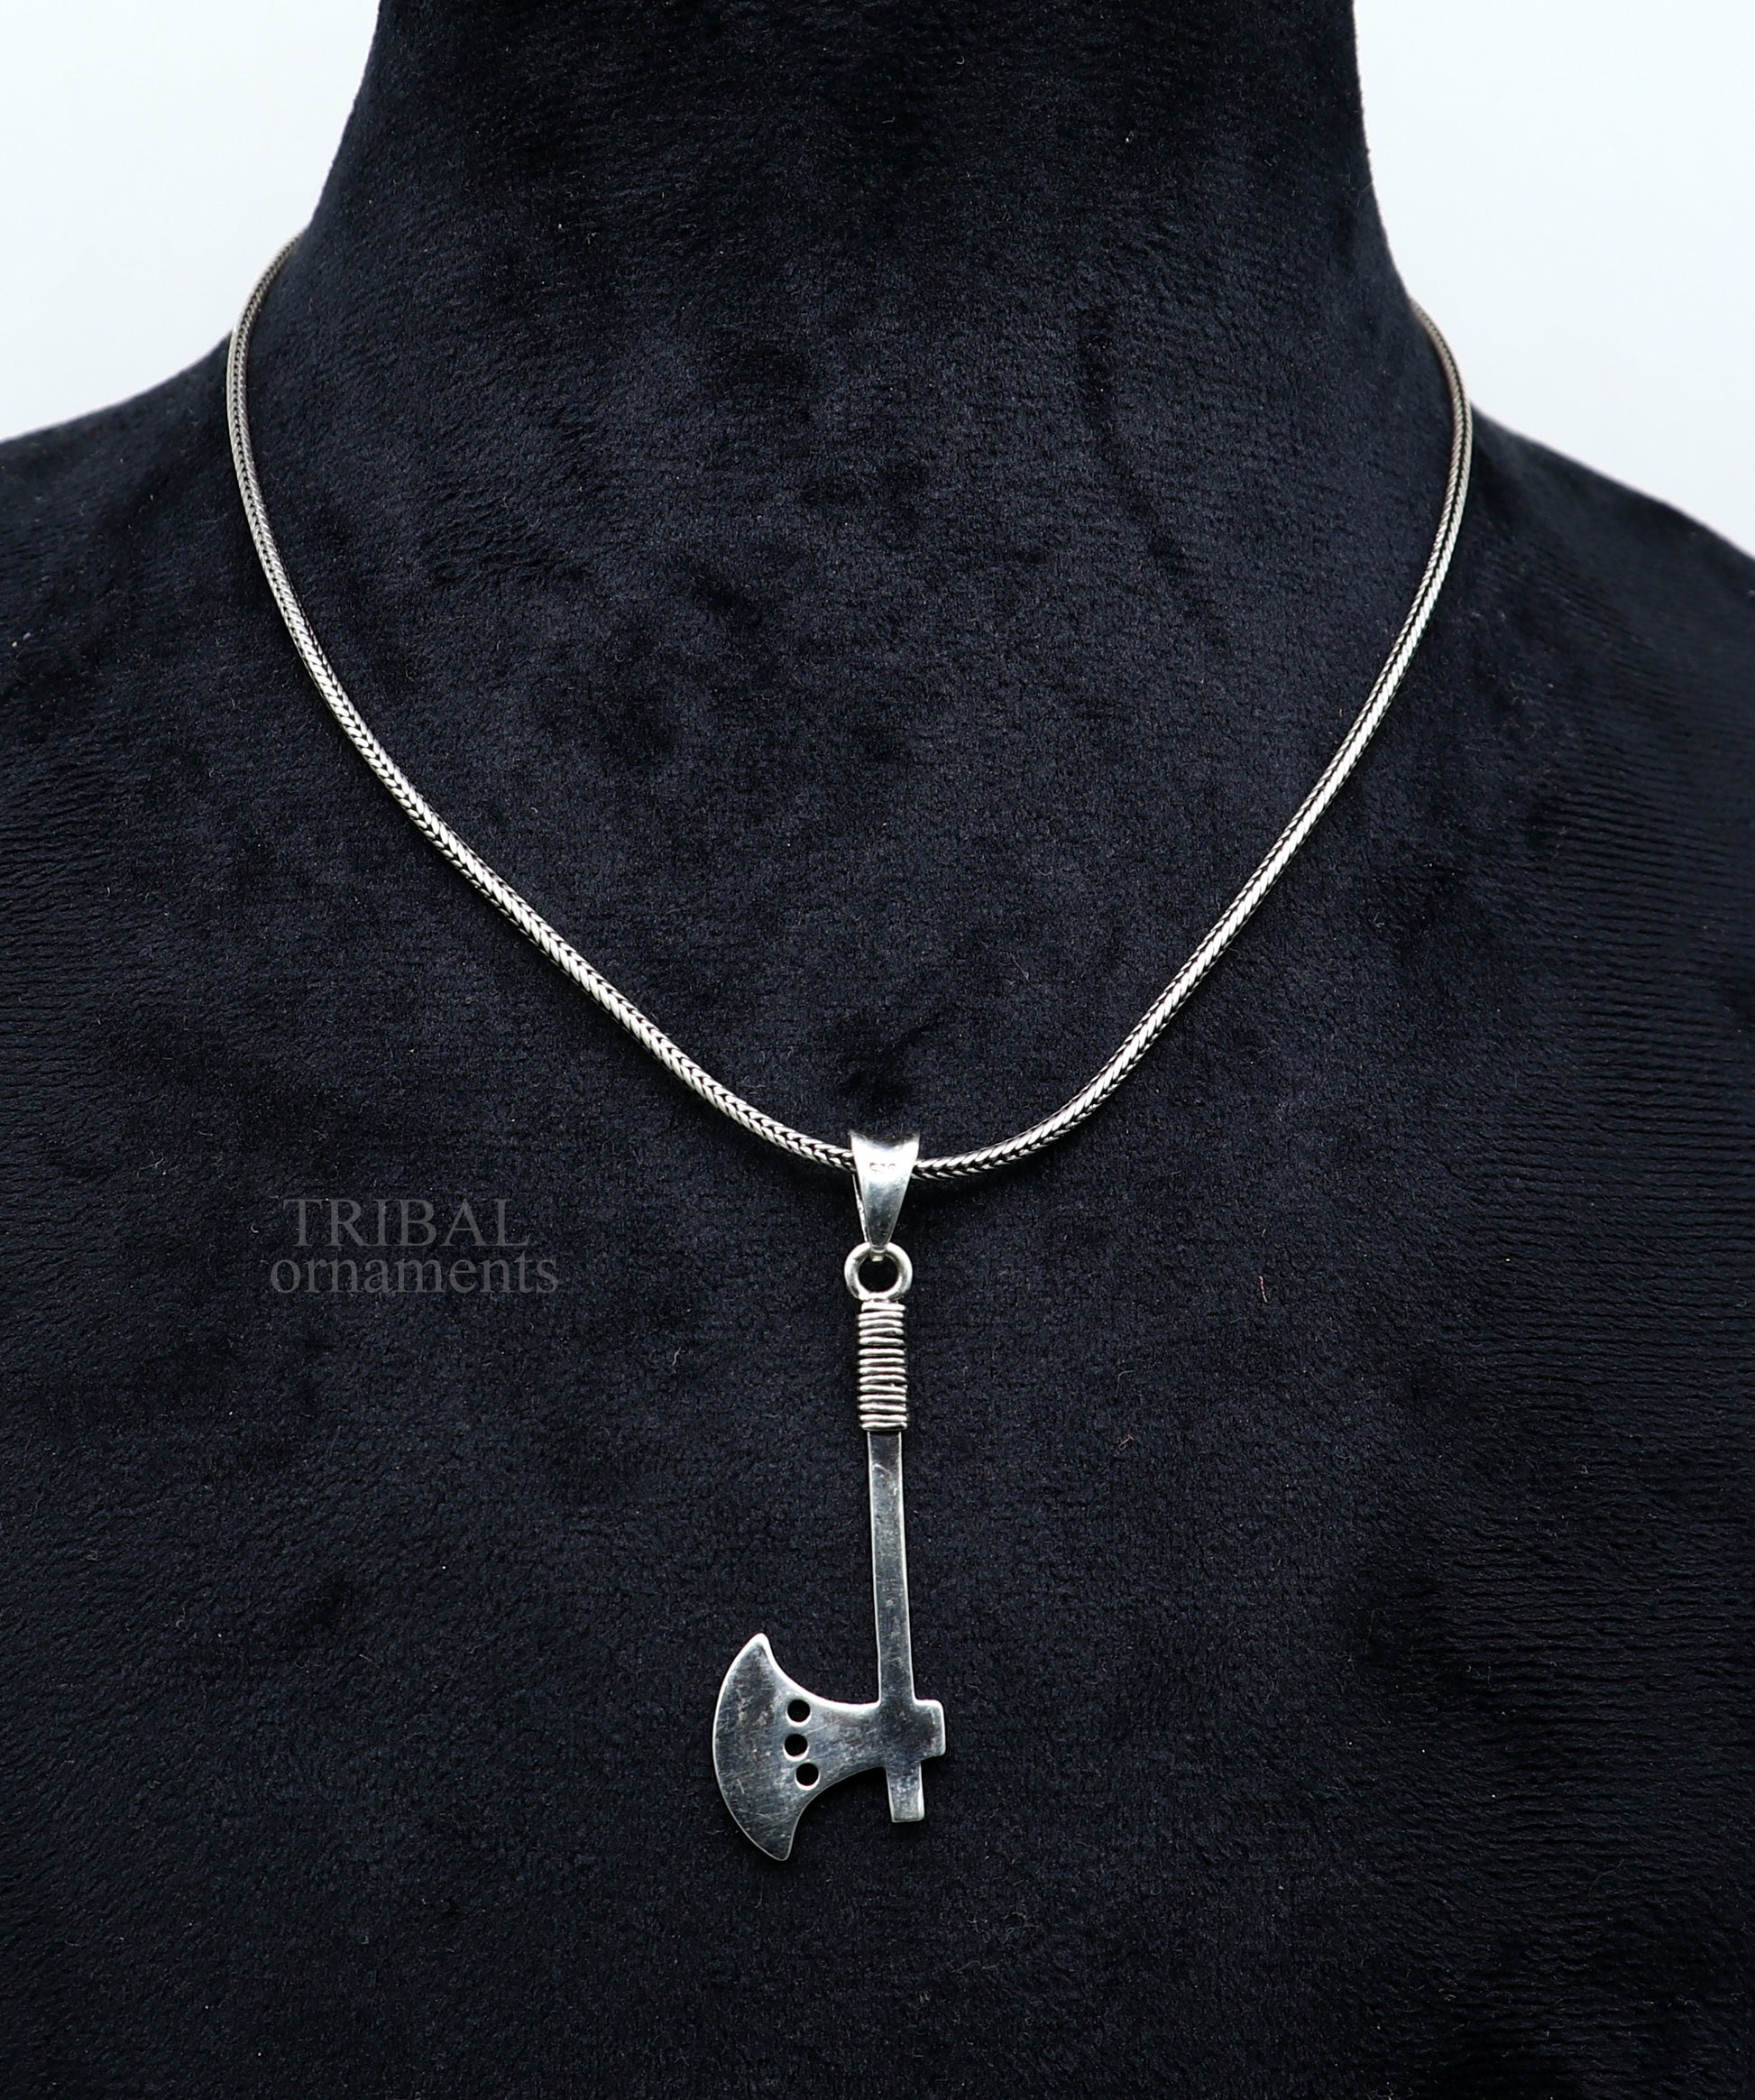 Pure 925 sterling silver handmade axe / kulhadi shape pendant, amazing designer fabulous pendant unisex  jewelry ssp1442 - TRIBAL ORNAMENTS